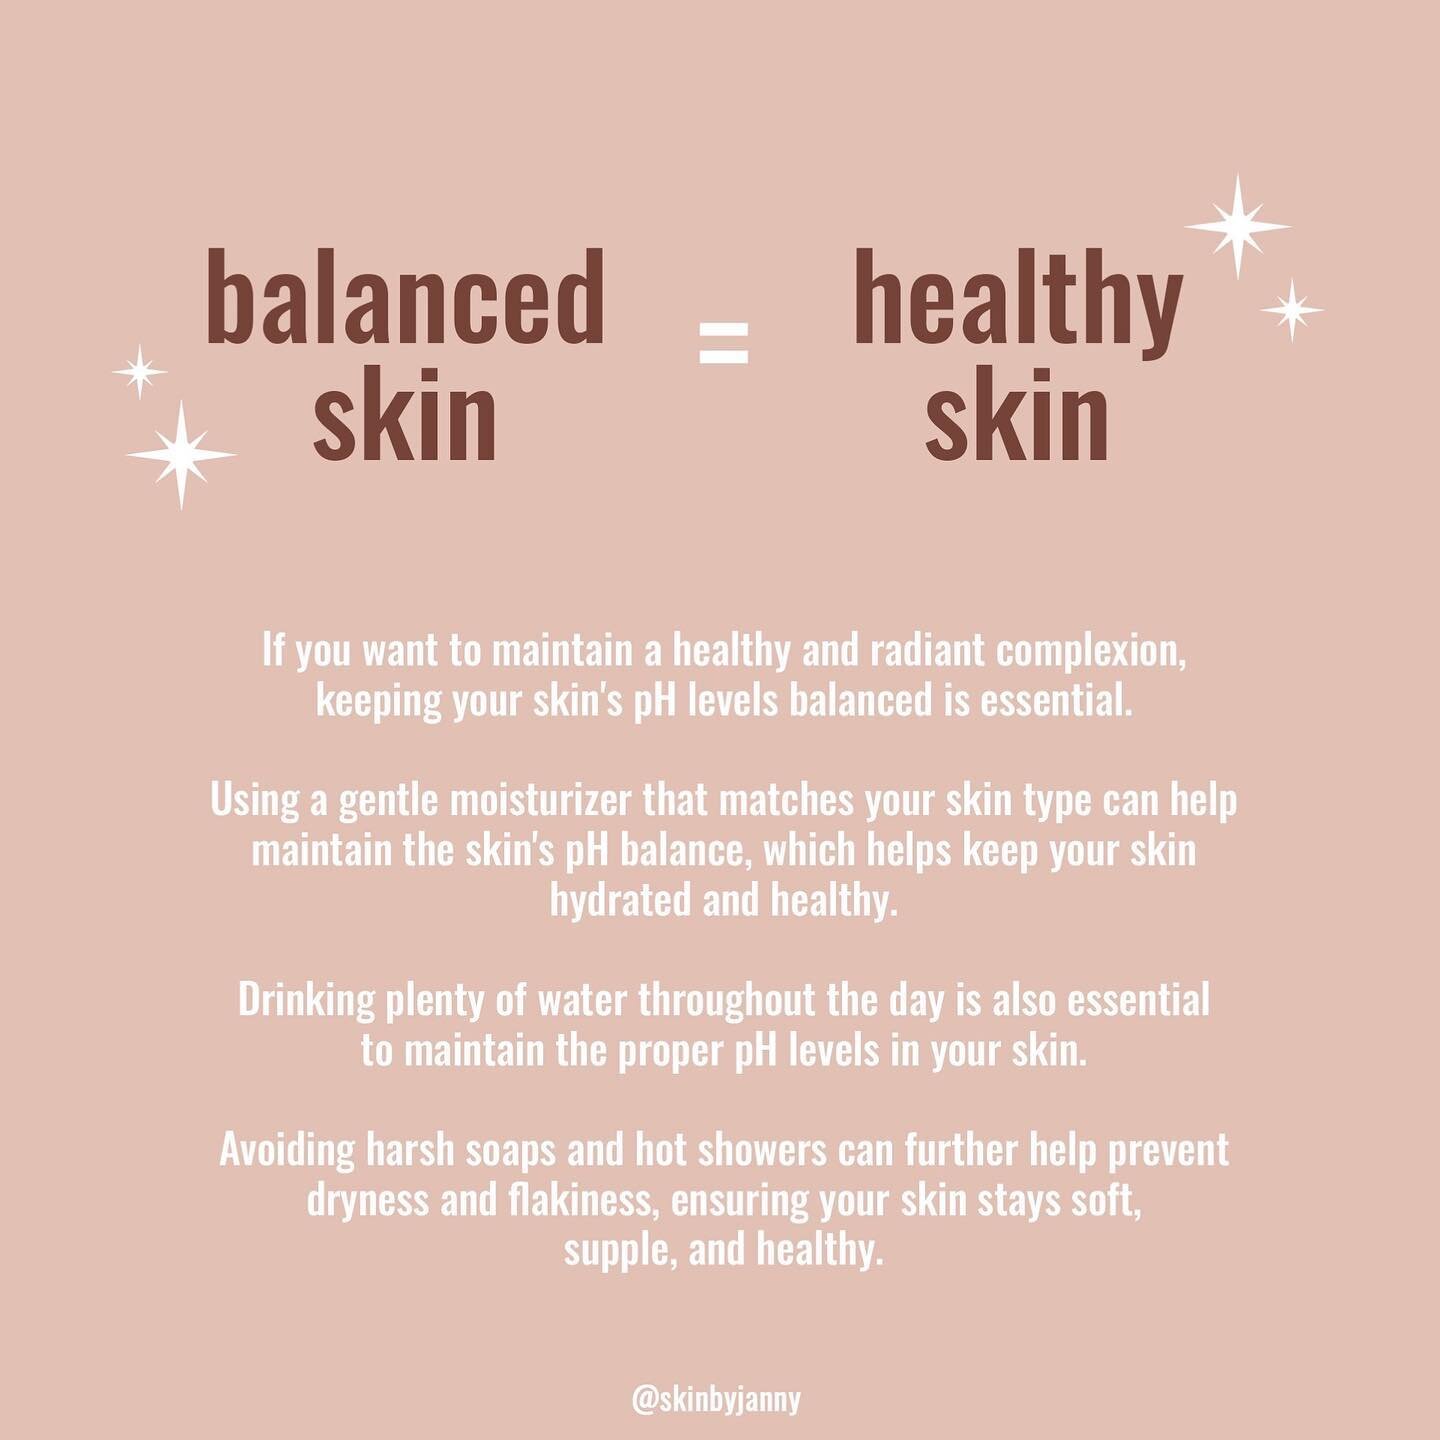 balanced skin = healthy skin
HAPPY MONDAY #skinbyjanny